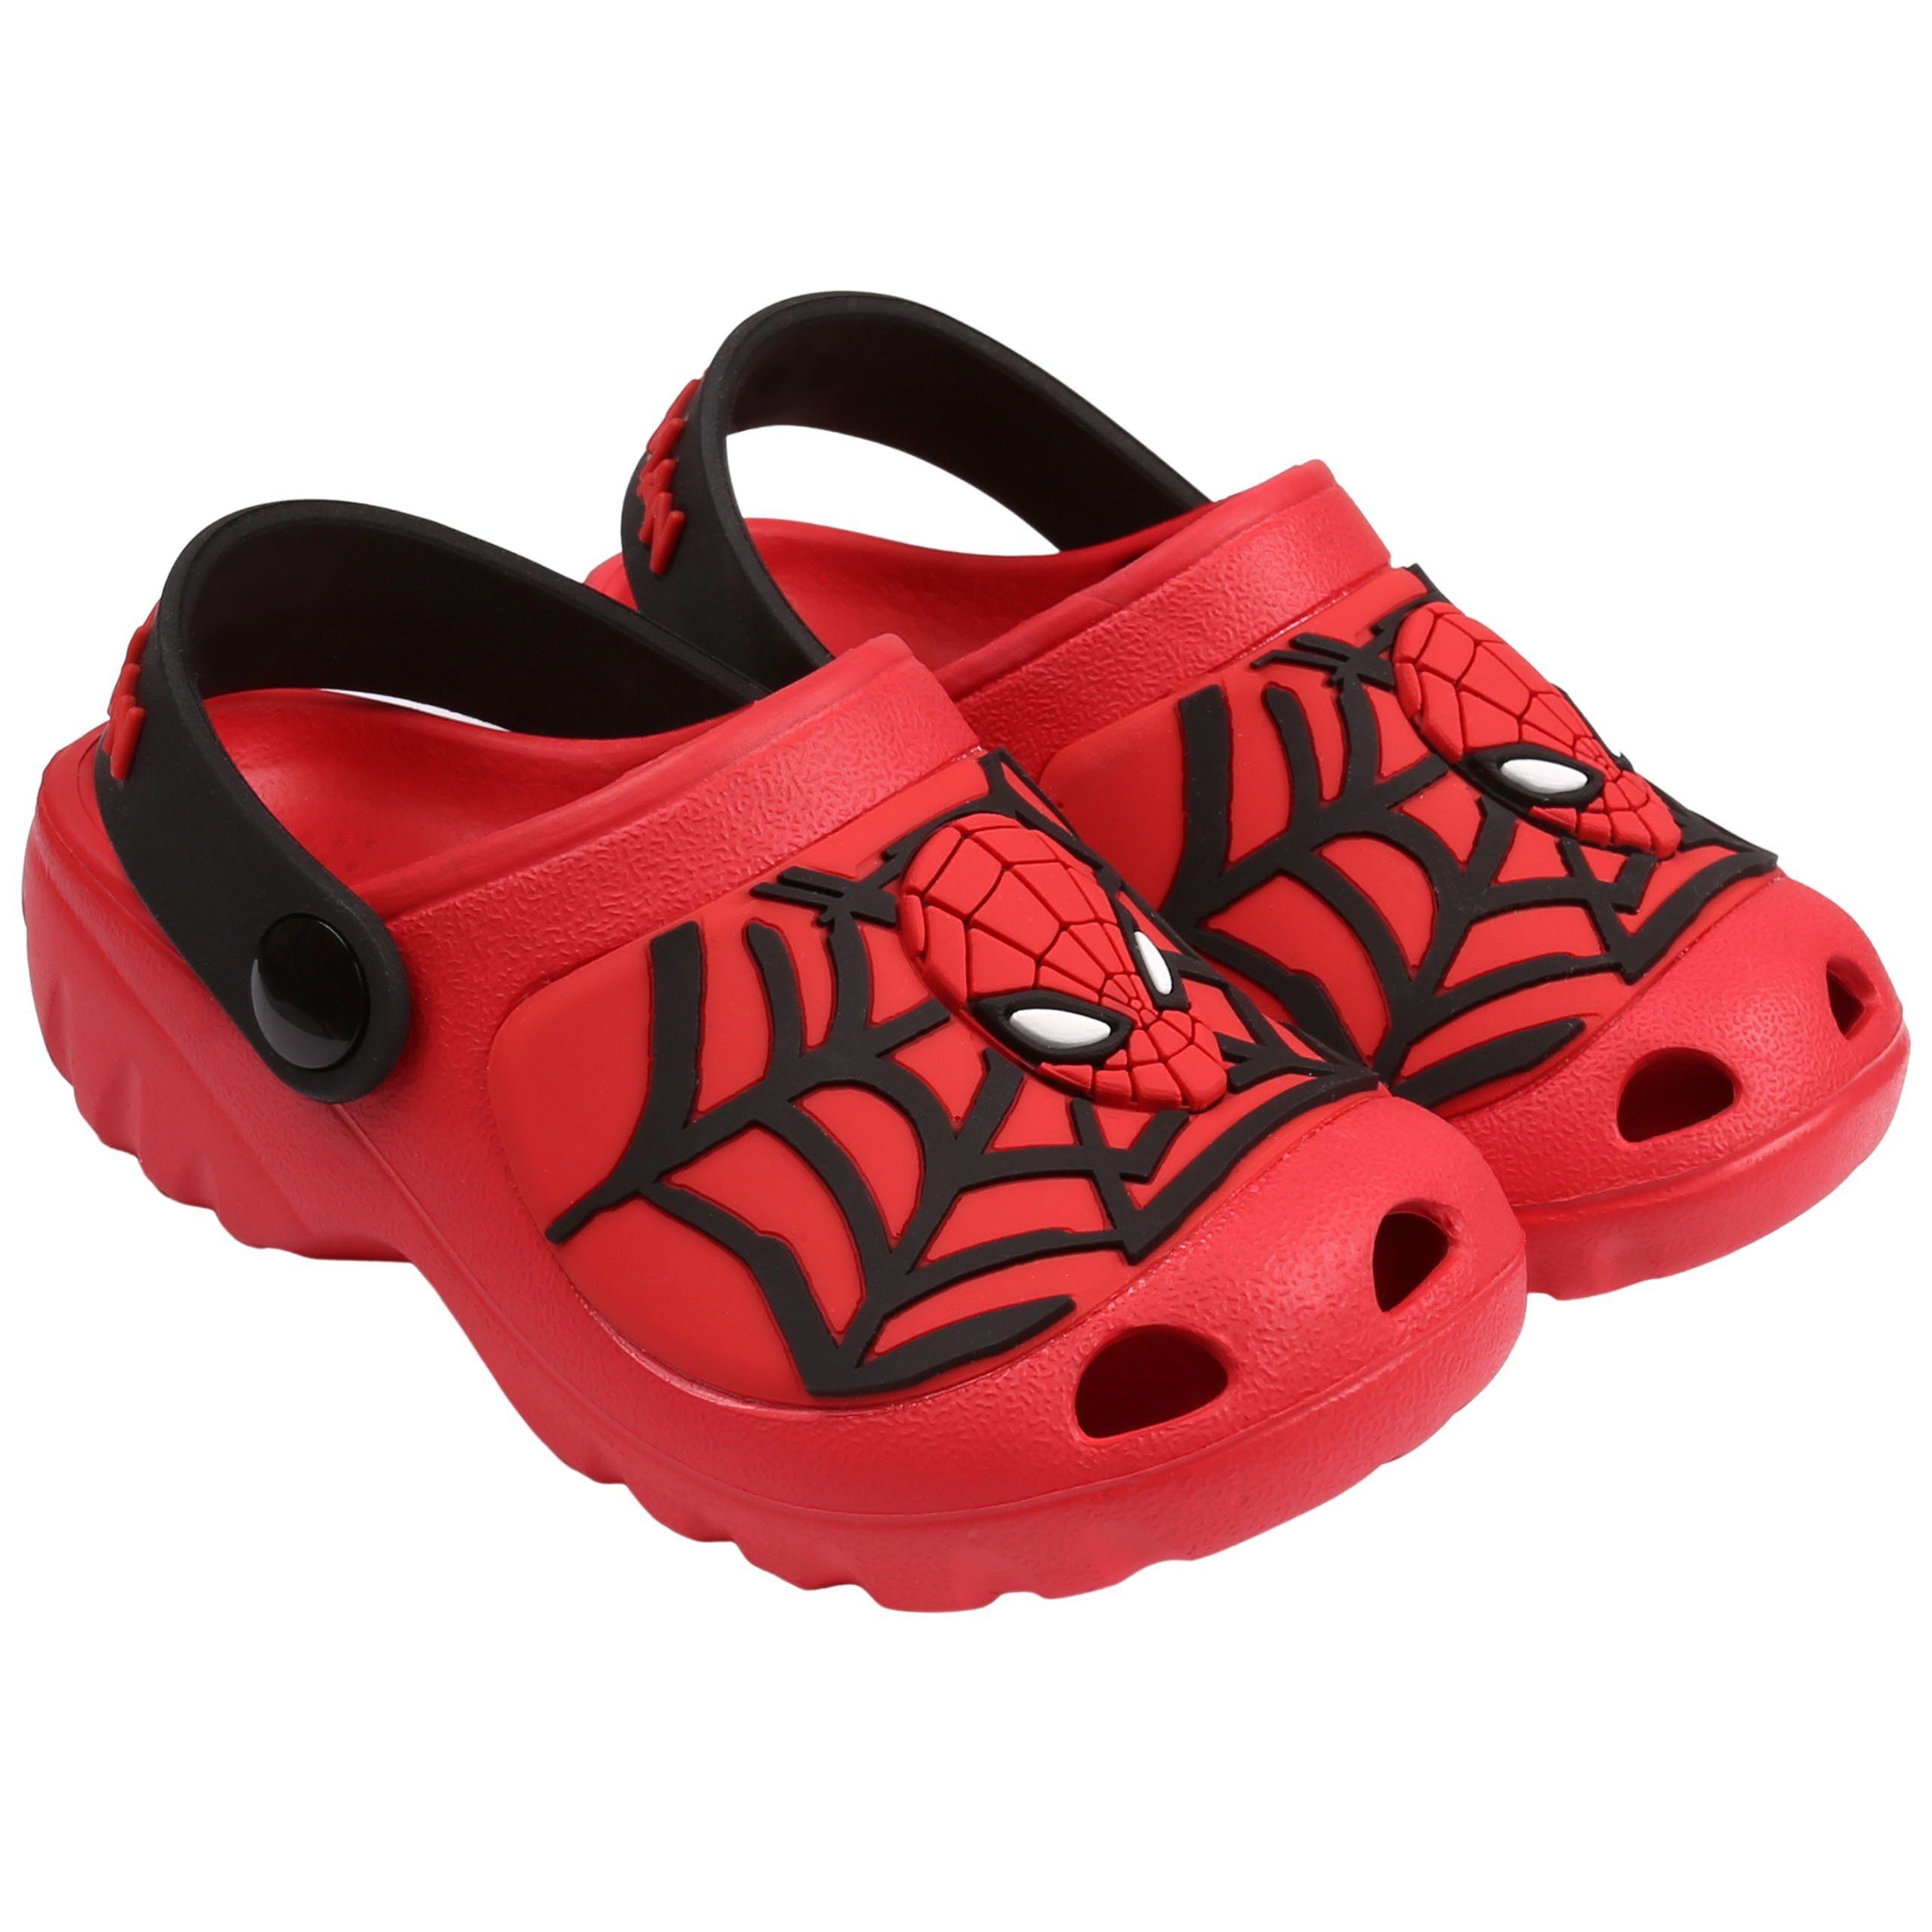 SpiderMan Badelatschen/Crocs rote Badeschuh Kinder für Sarcia.eu